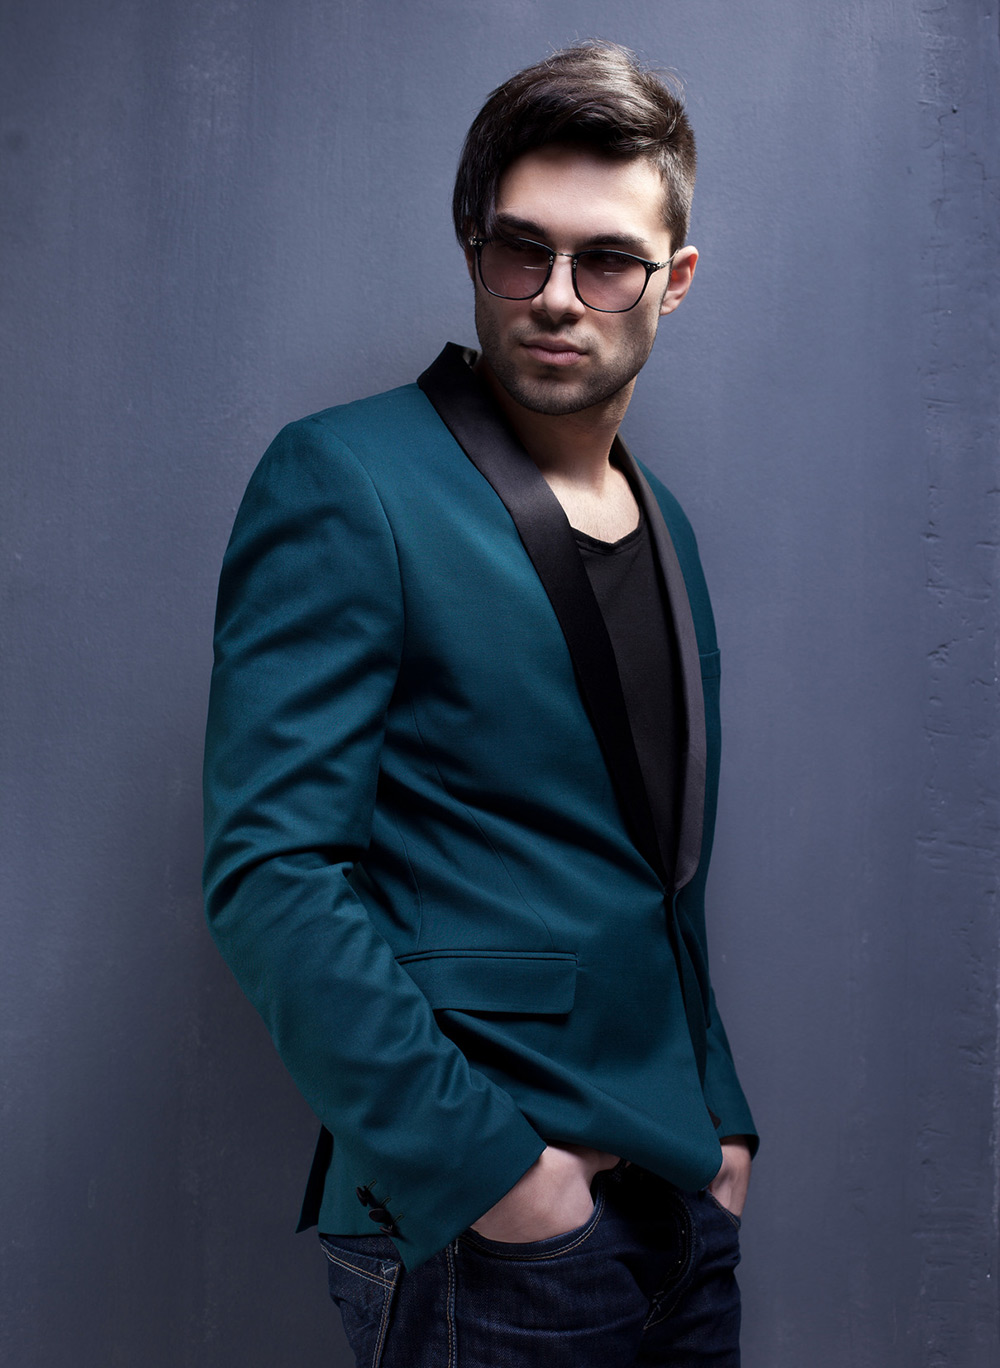 Male fashion model pose Stock Photo free download